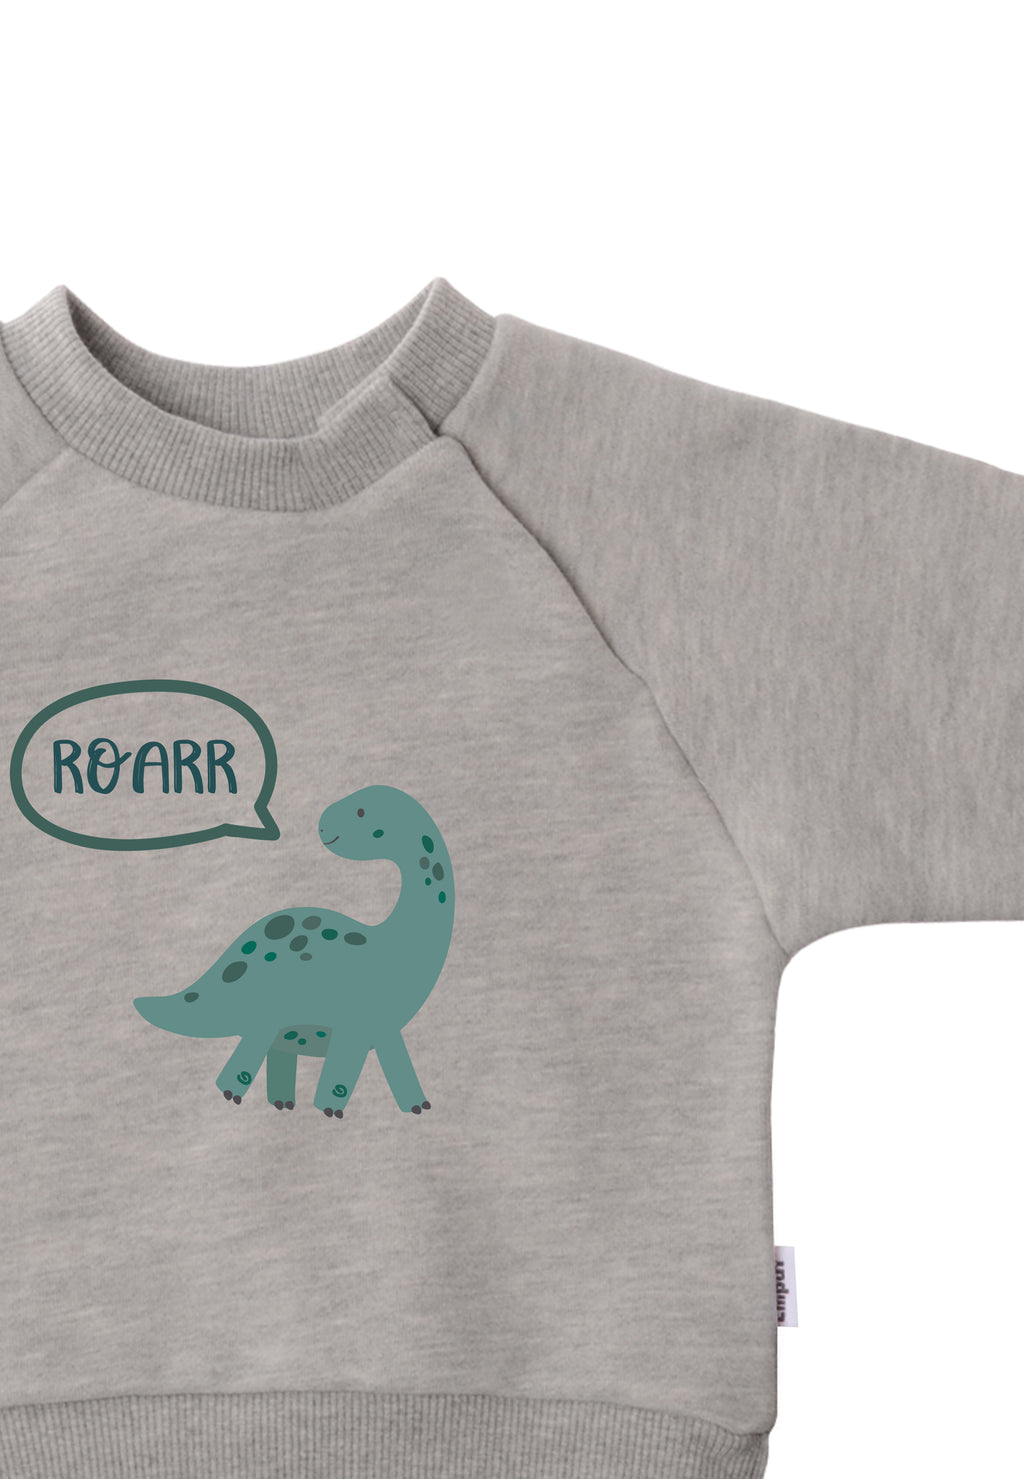 Graues Sweatshirt mit Dino Print